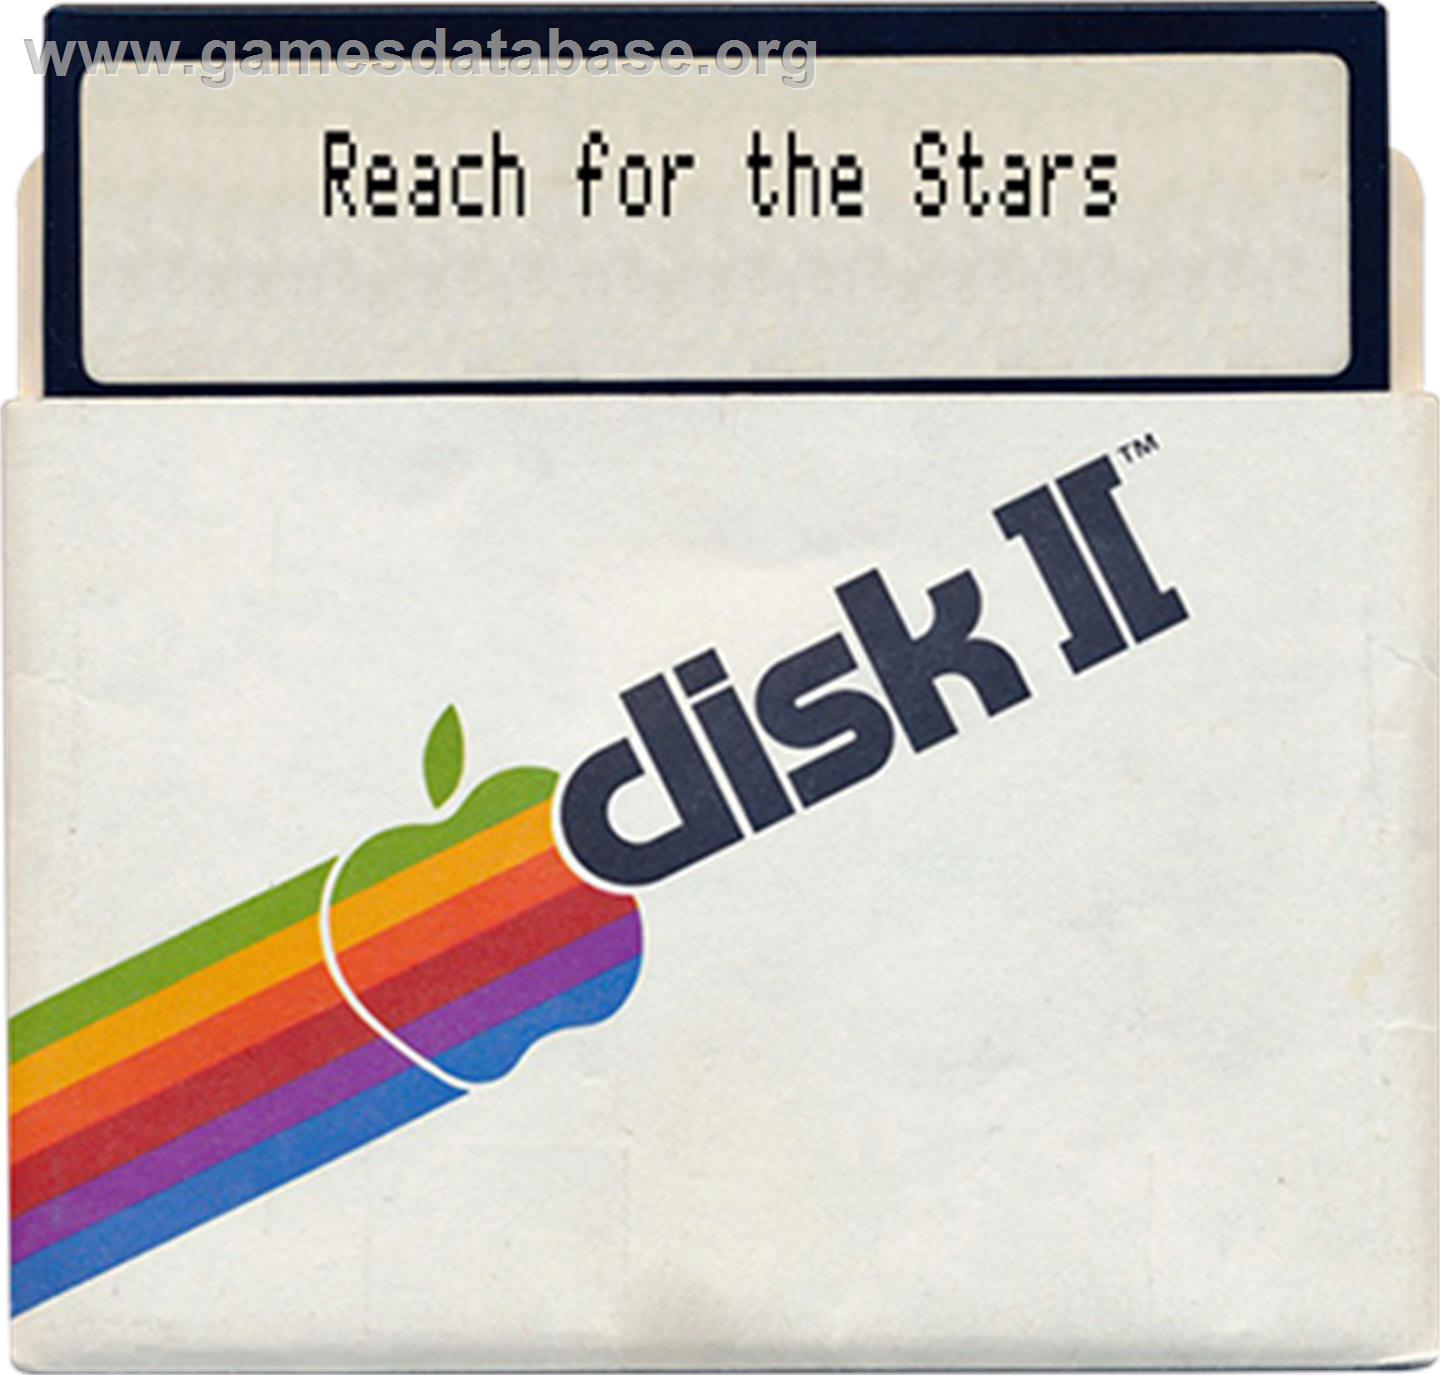 Reach for the Stars - Apple II - Artwork - Disc